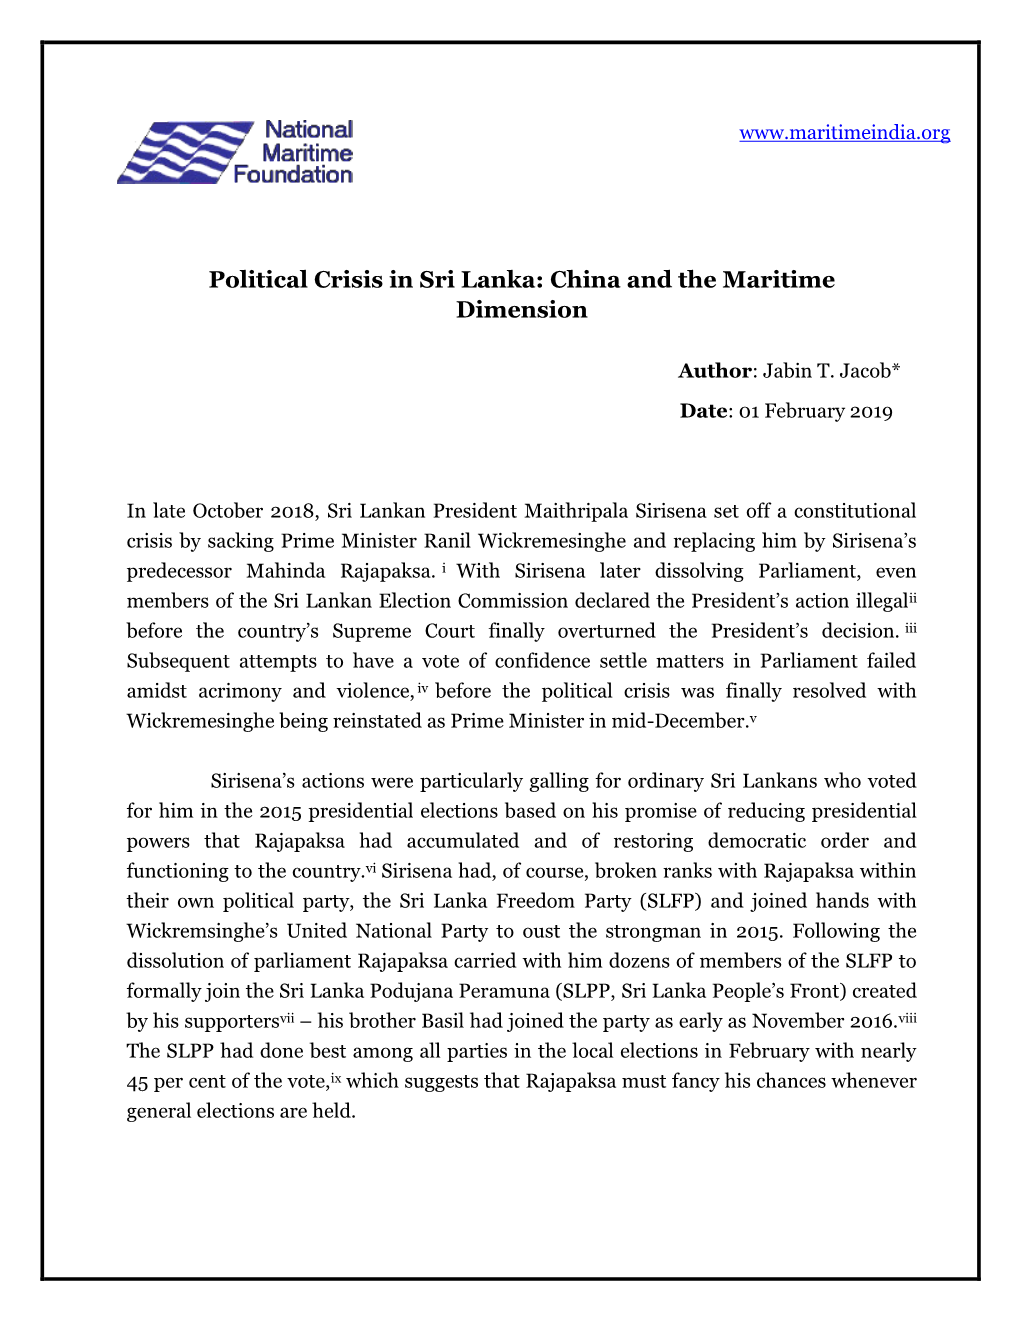 Political Crisis in Sri Lanka: China and the Maritime Dimension